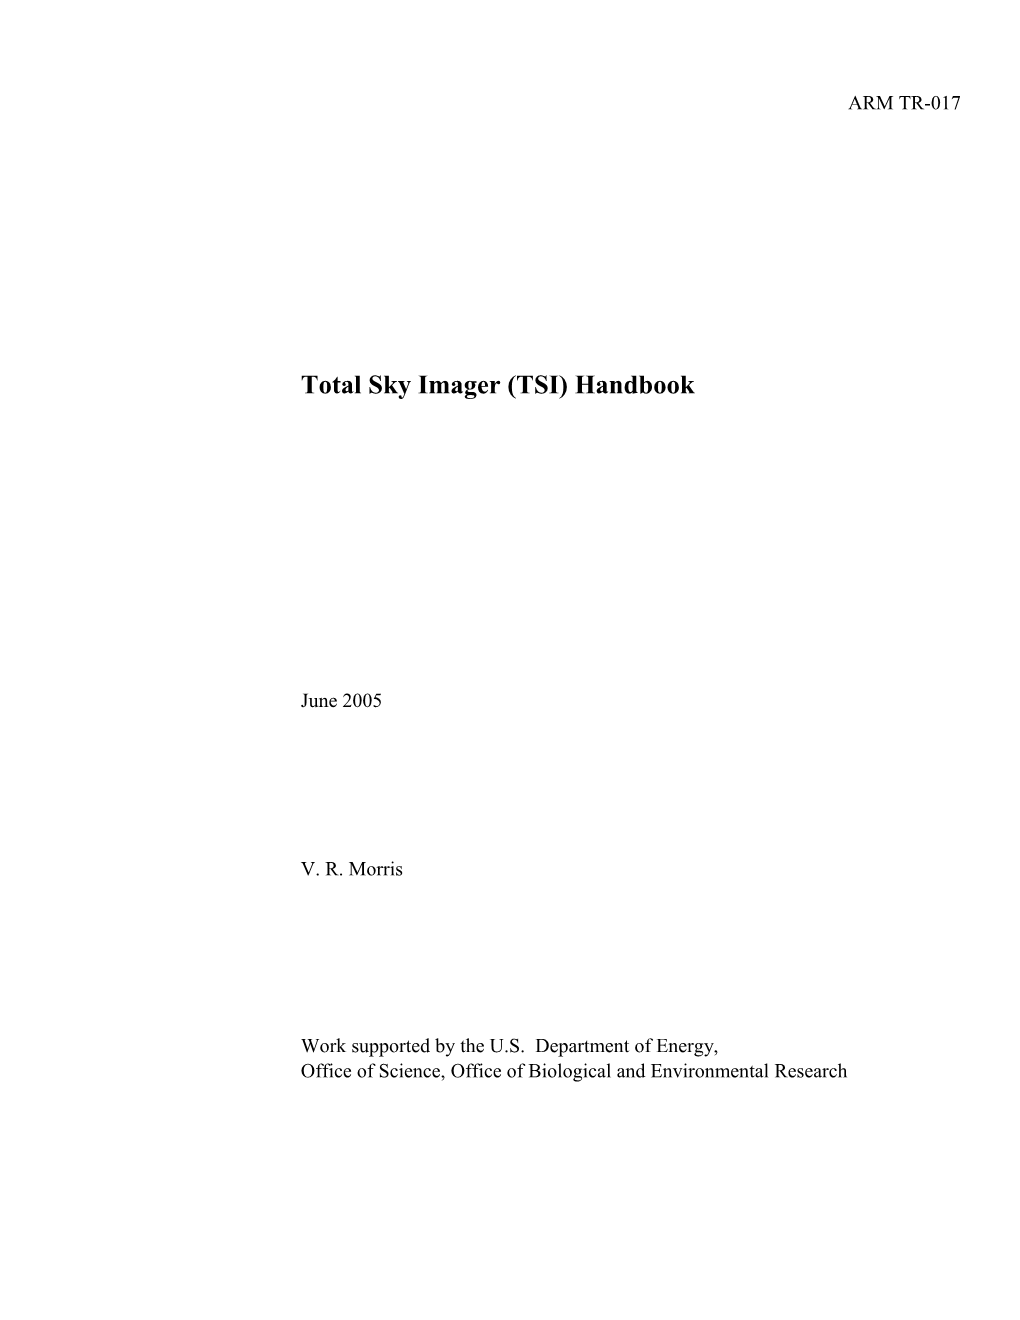 Total Sky Imager (TSI) Handbook